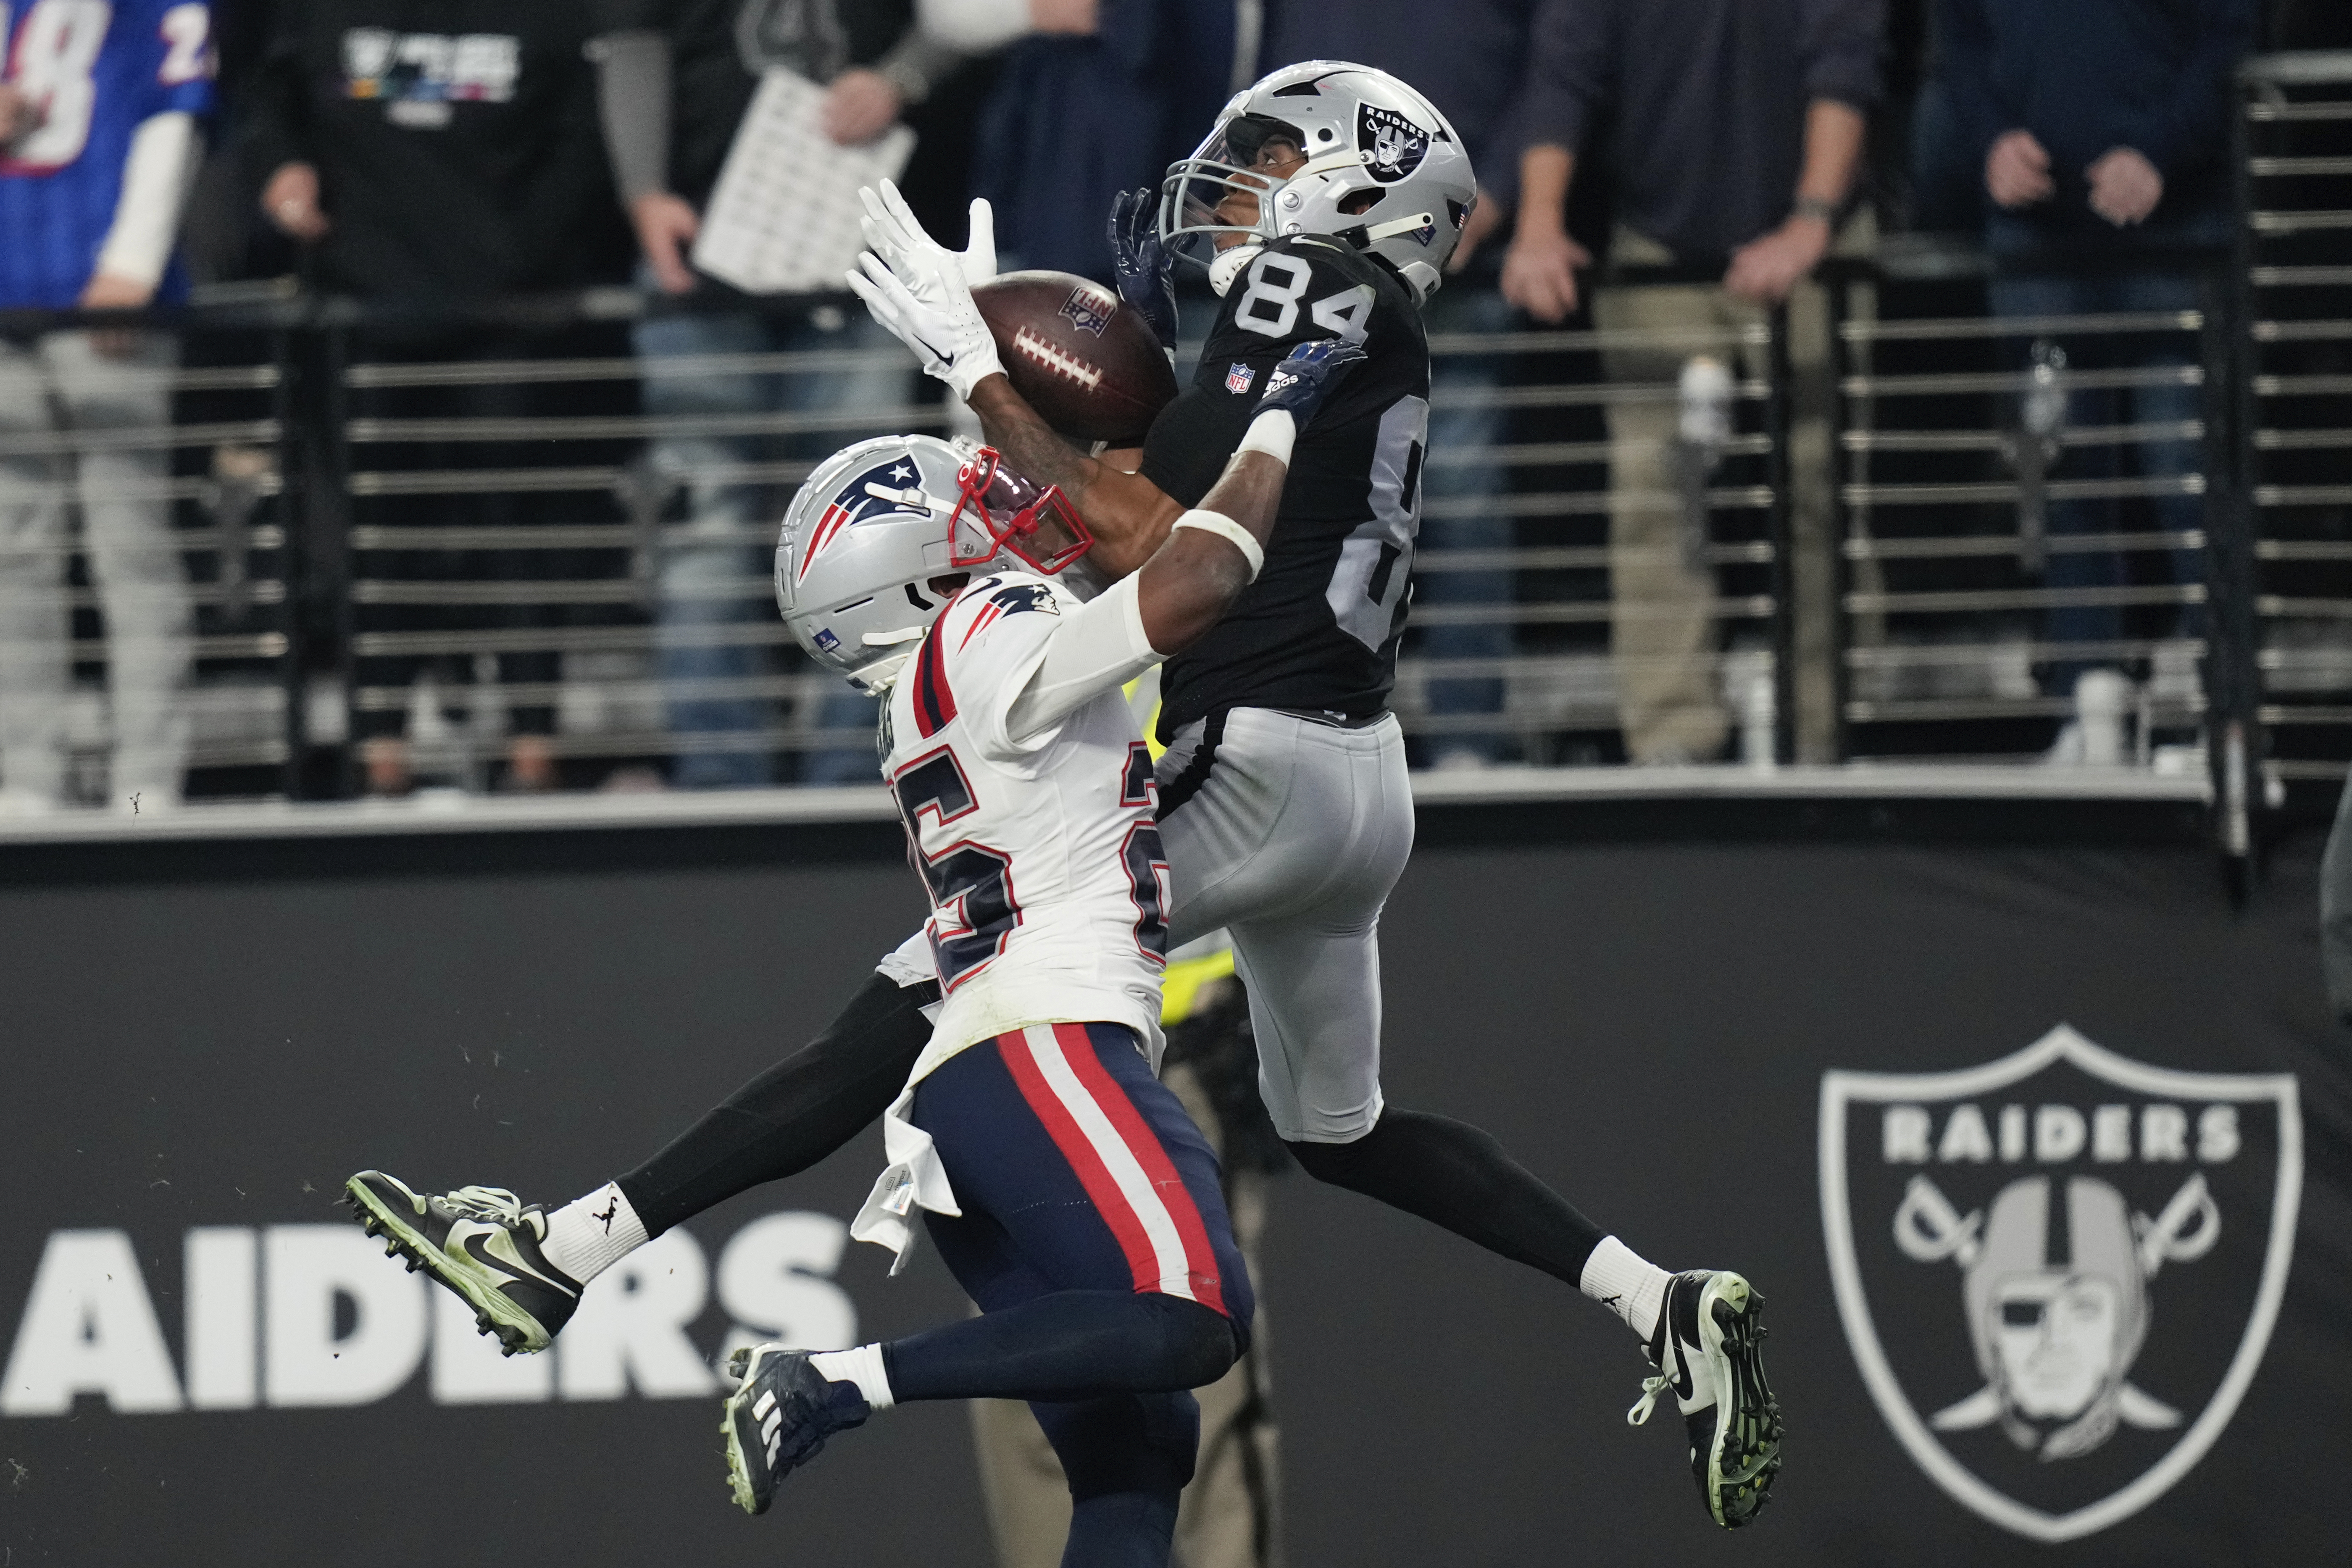 Jones snags lateral on final play, Raiders stun Patriots - The San